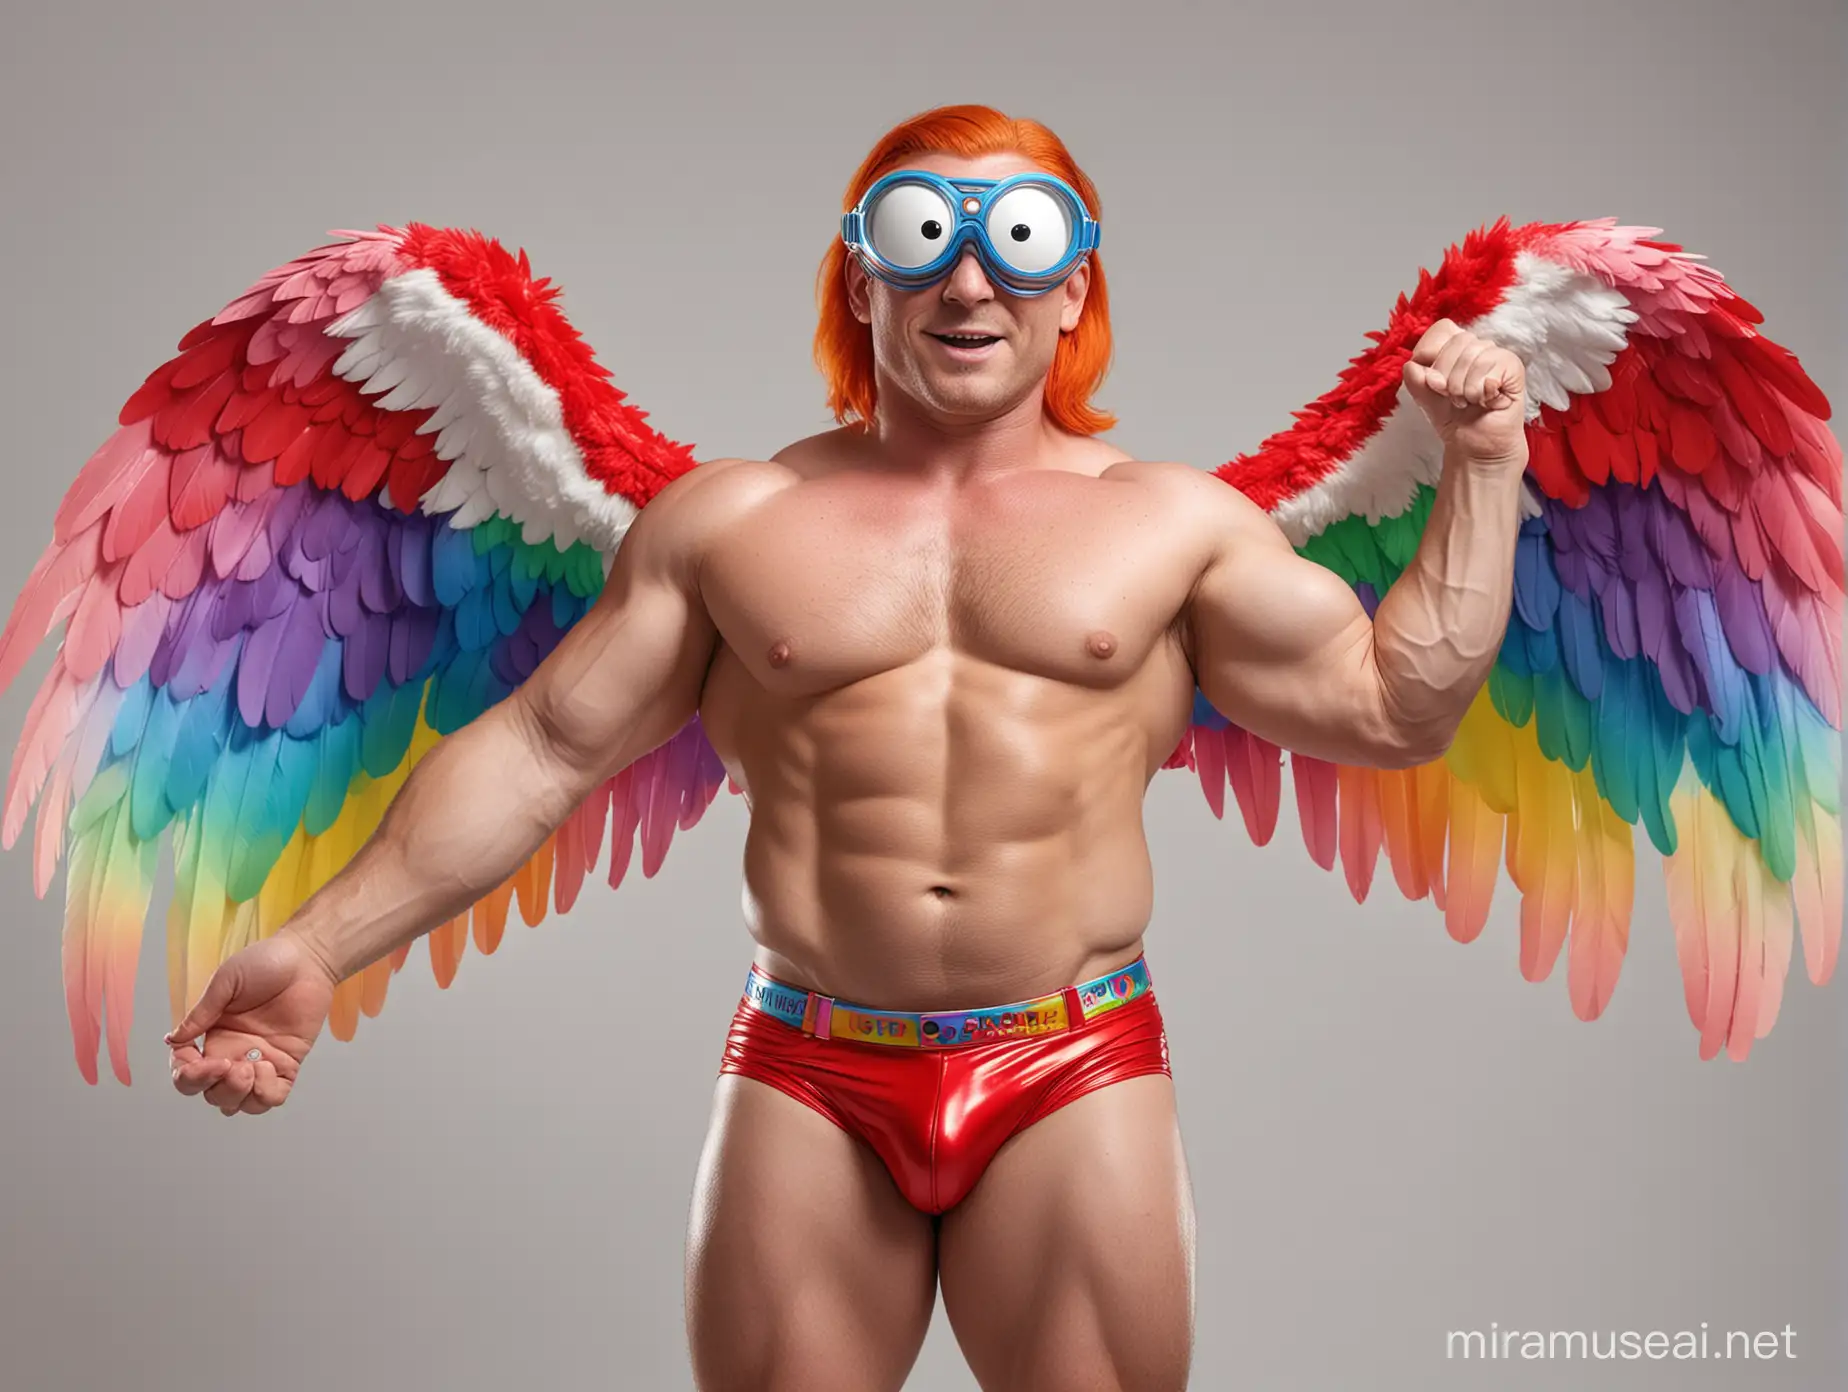 Muscular Redhead Bodybuilder Flexing in Rainbow Eagle Wings Jacket